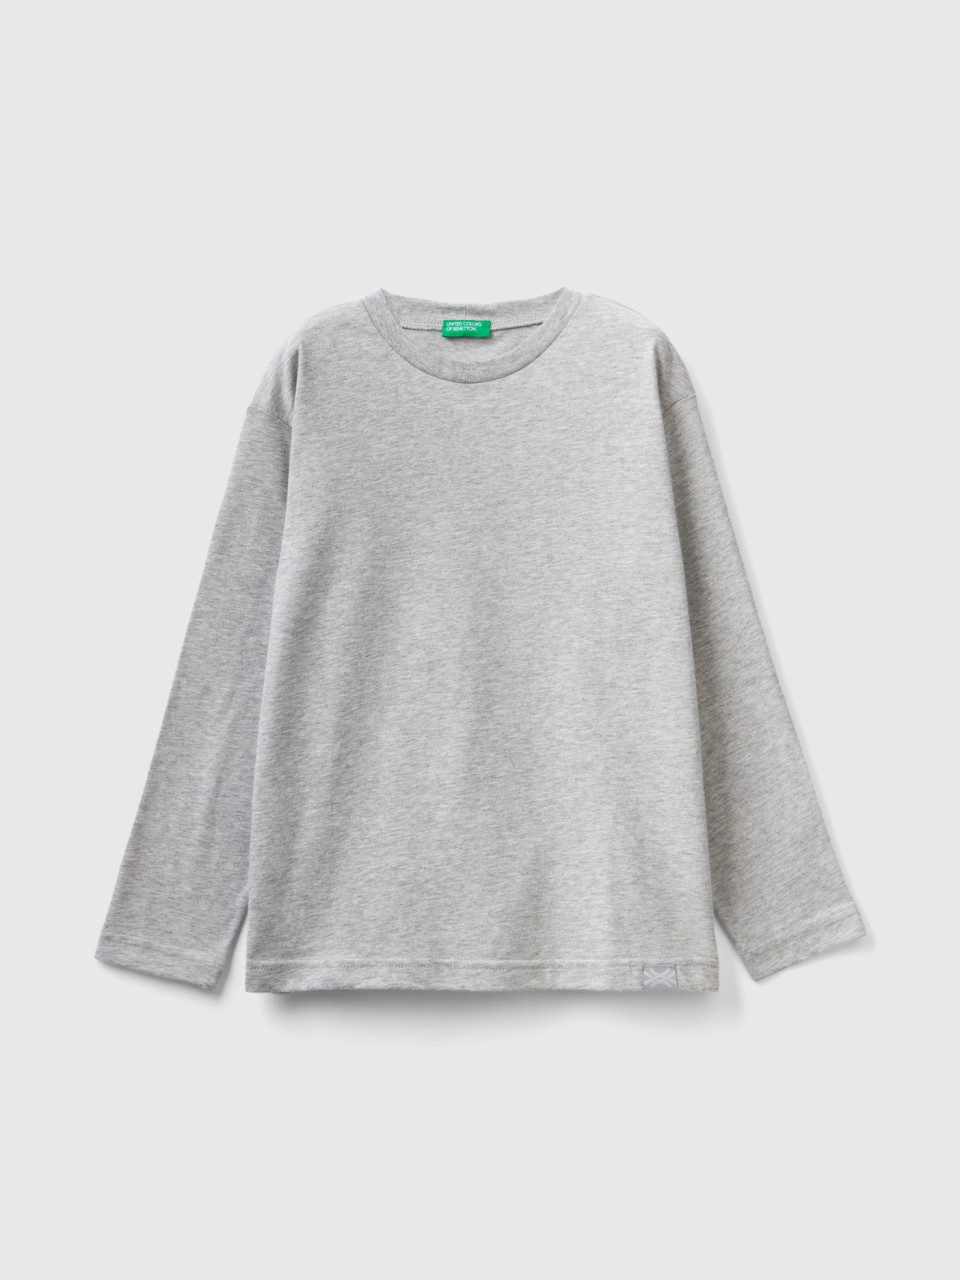 Benetton, 100% Organic Cotton Crew Neck T-shirt, Light Gray, Kids